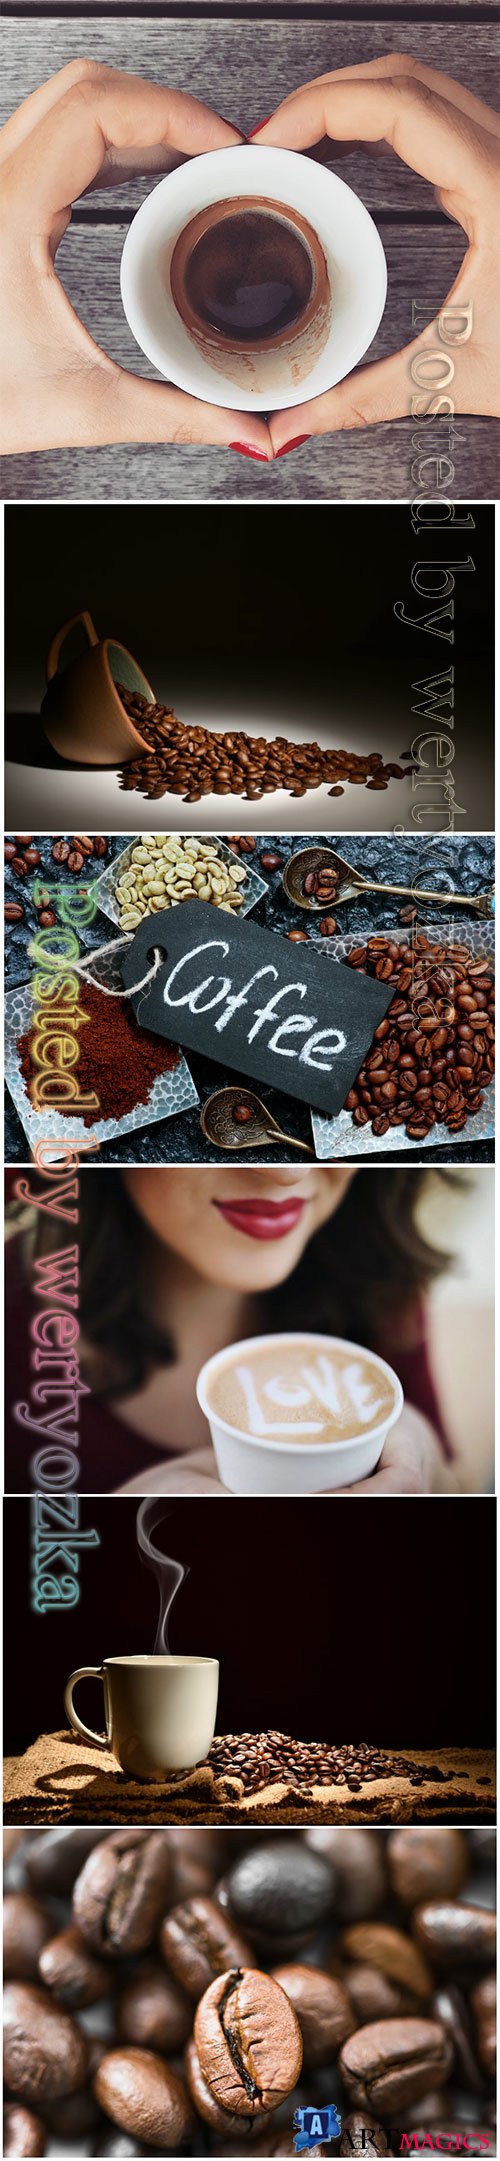 Coffee beans beautiful stock photo